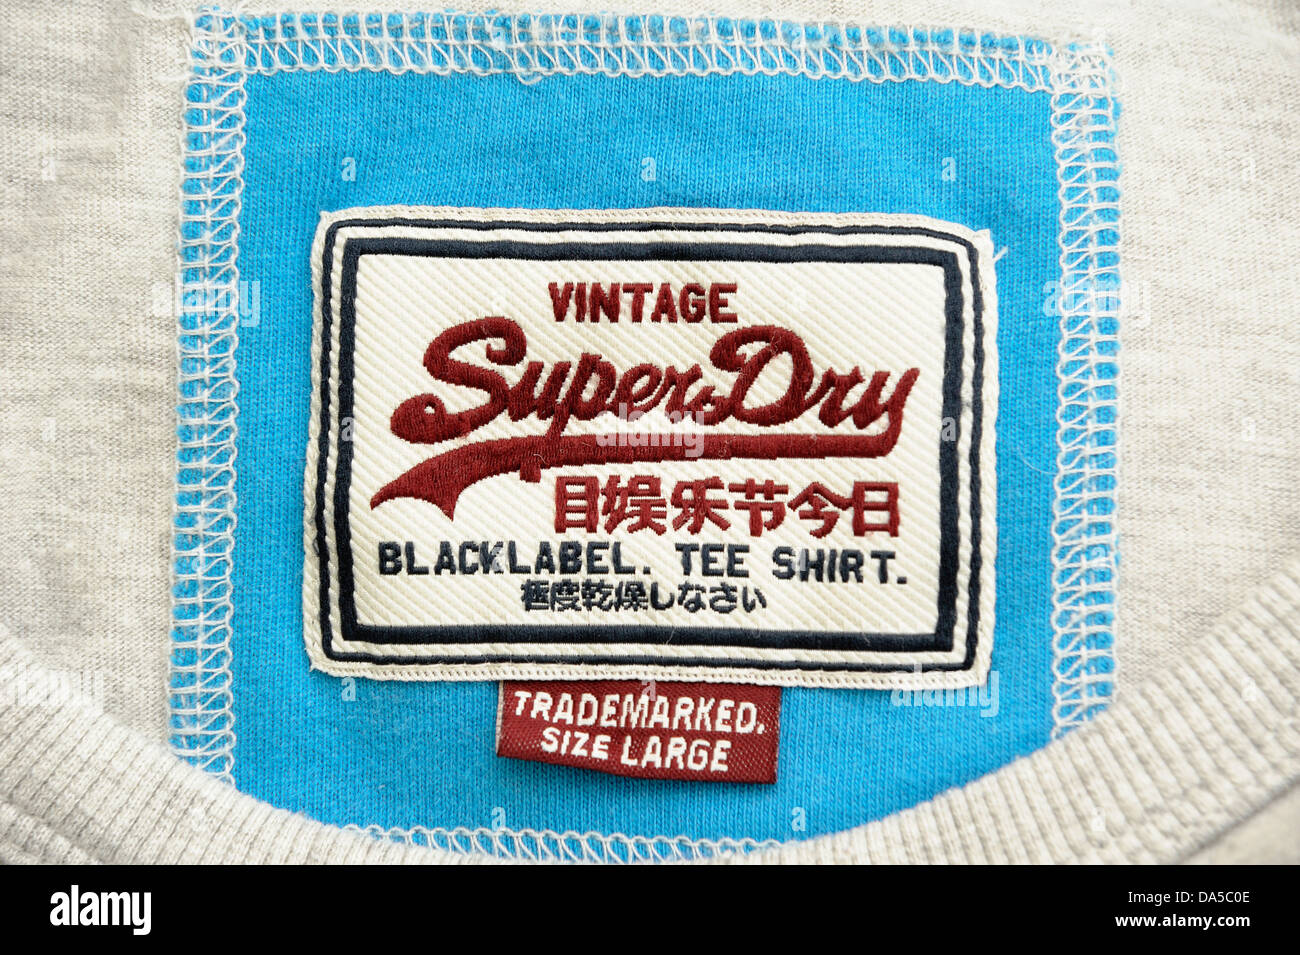 superdry clothing garment size label Stock Photo - Alamy